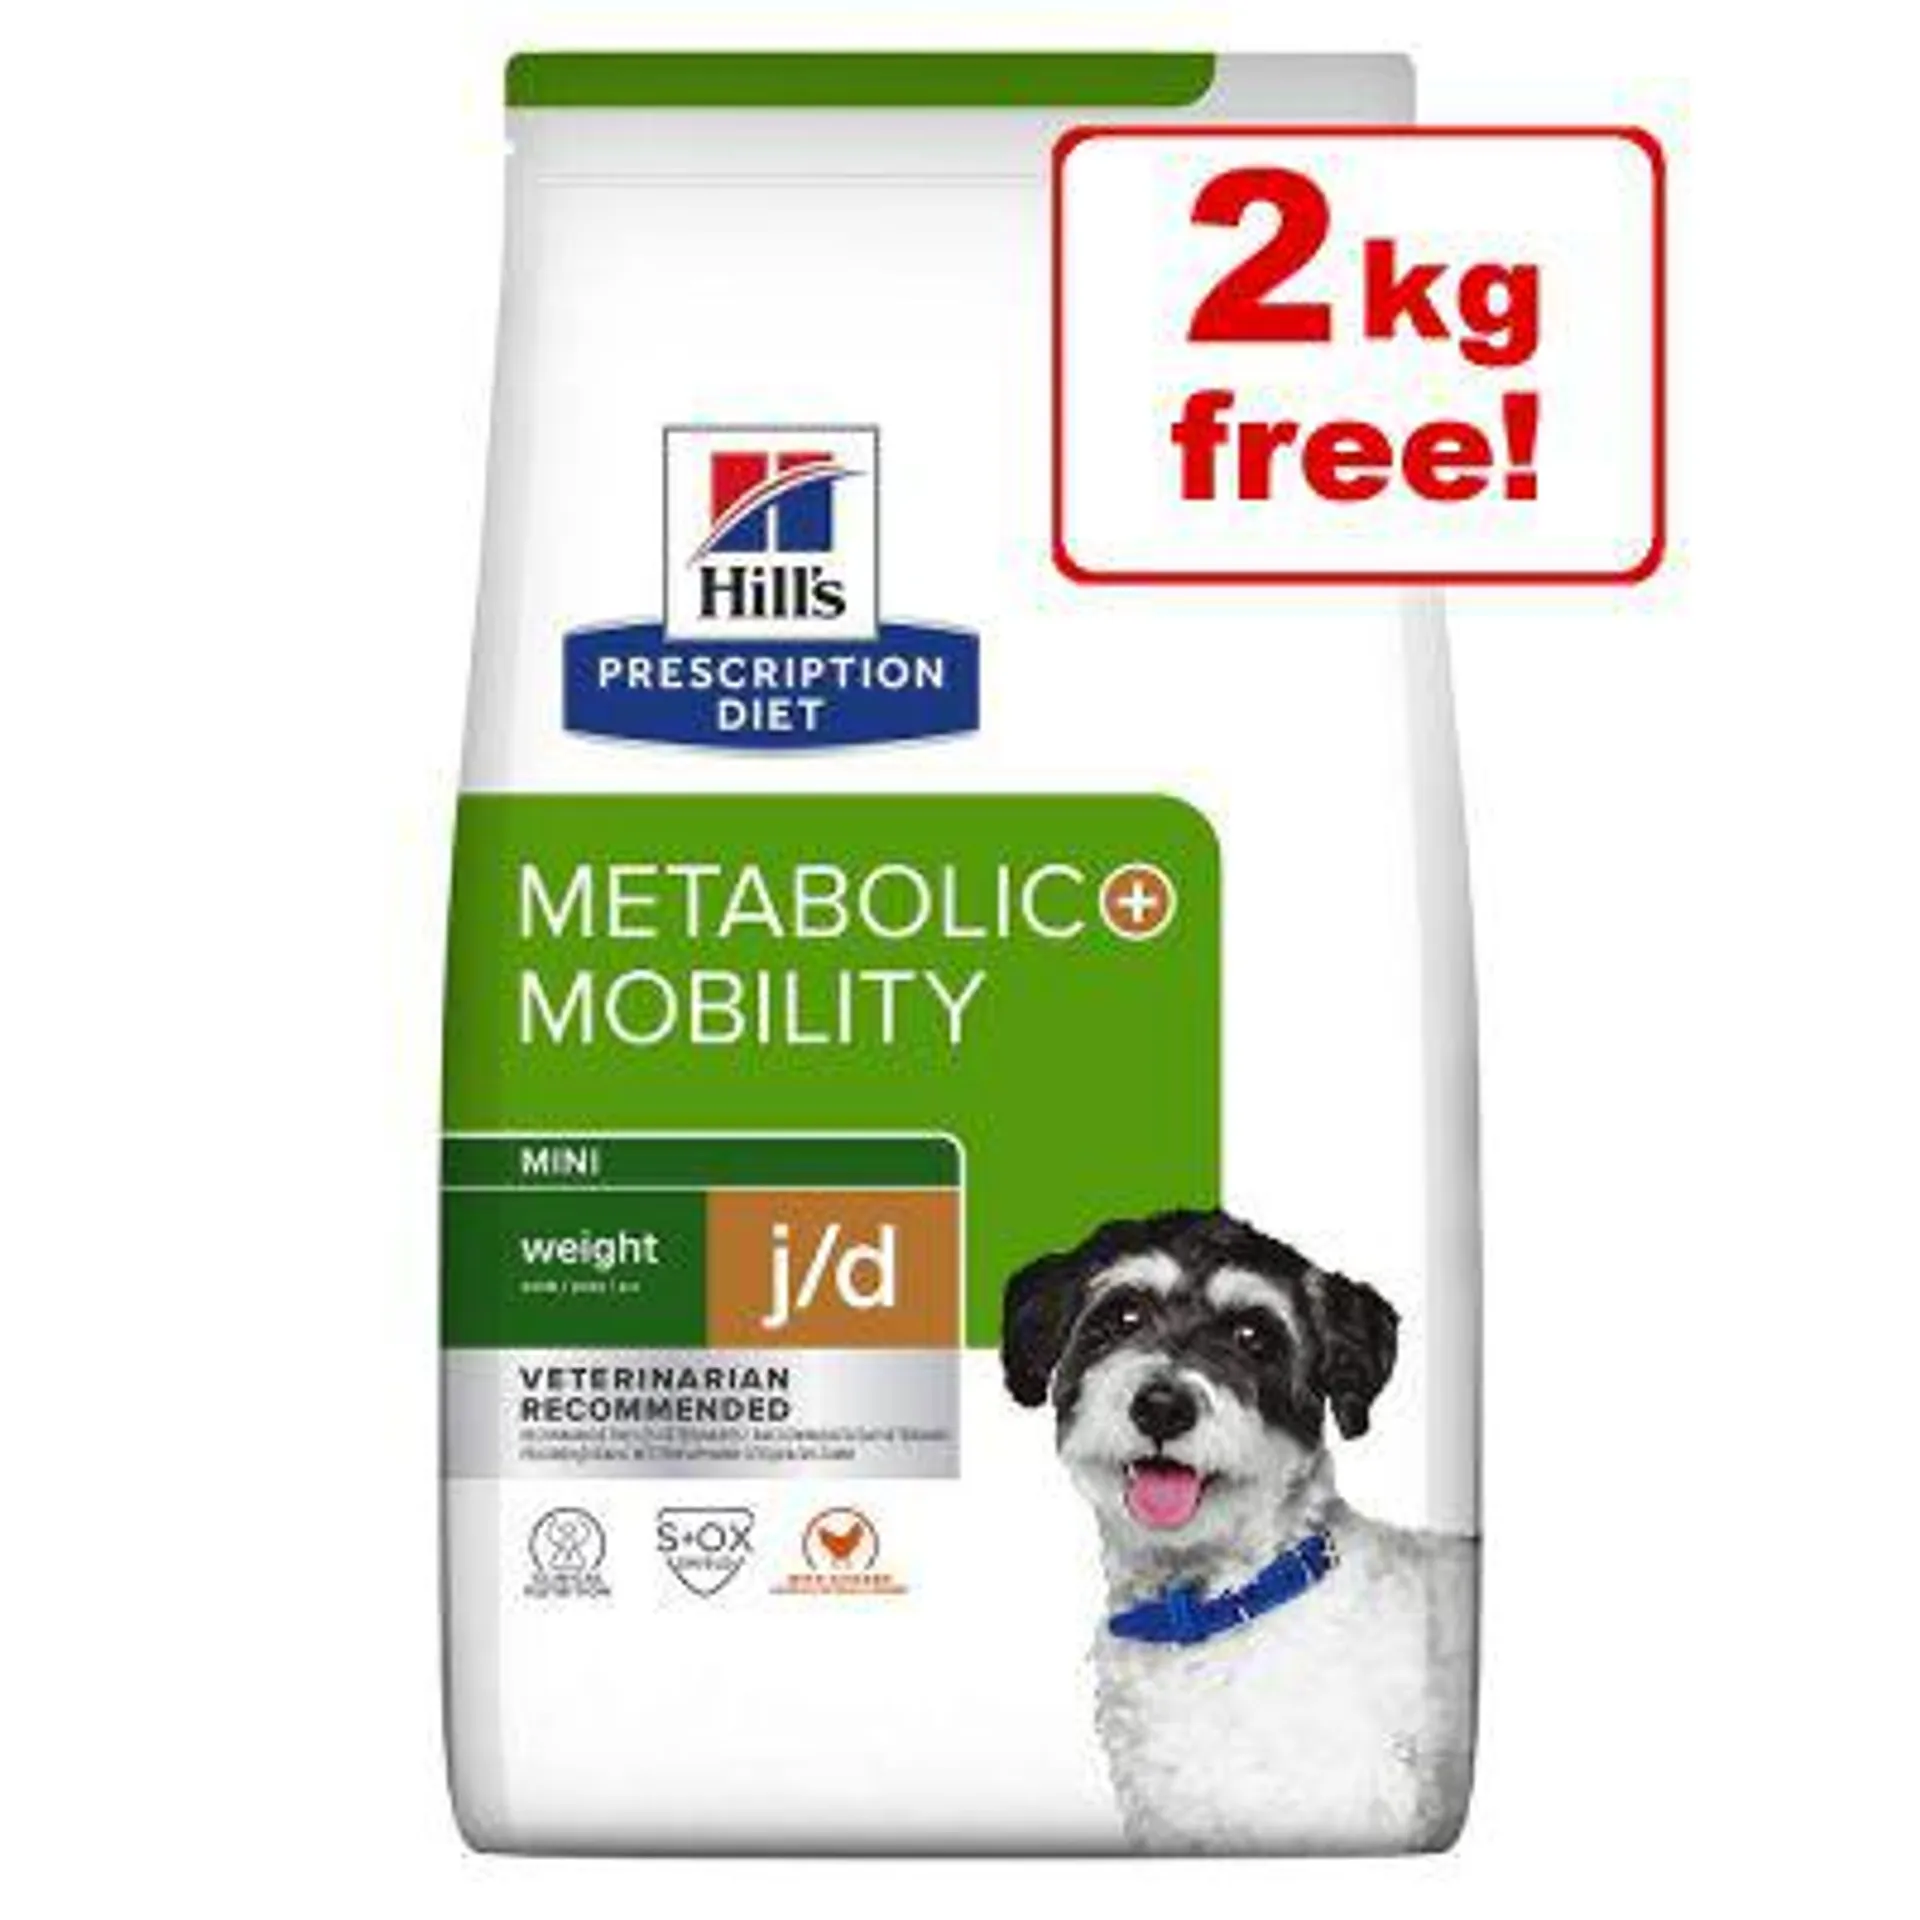 6kg Hill's Prescription Diet j/d Mini Metabolic + Mobility - 4 + 2kg Free!*